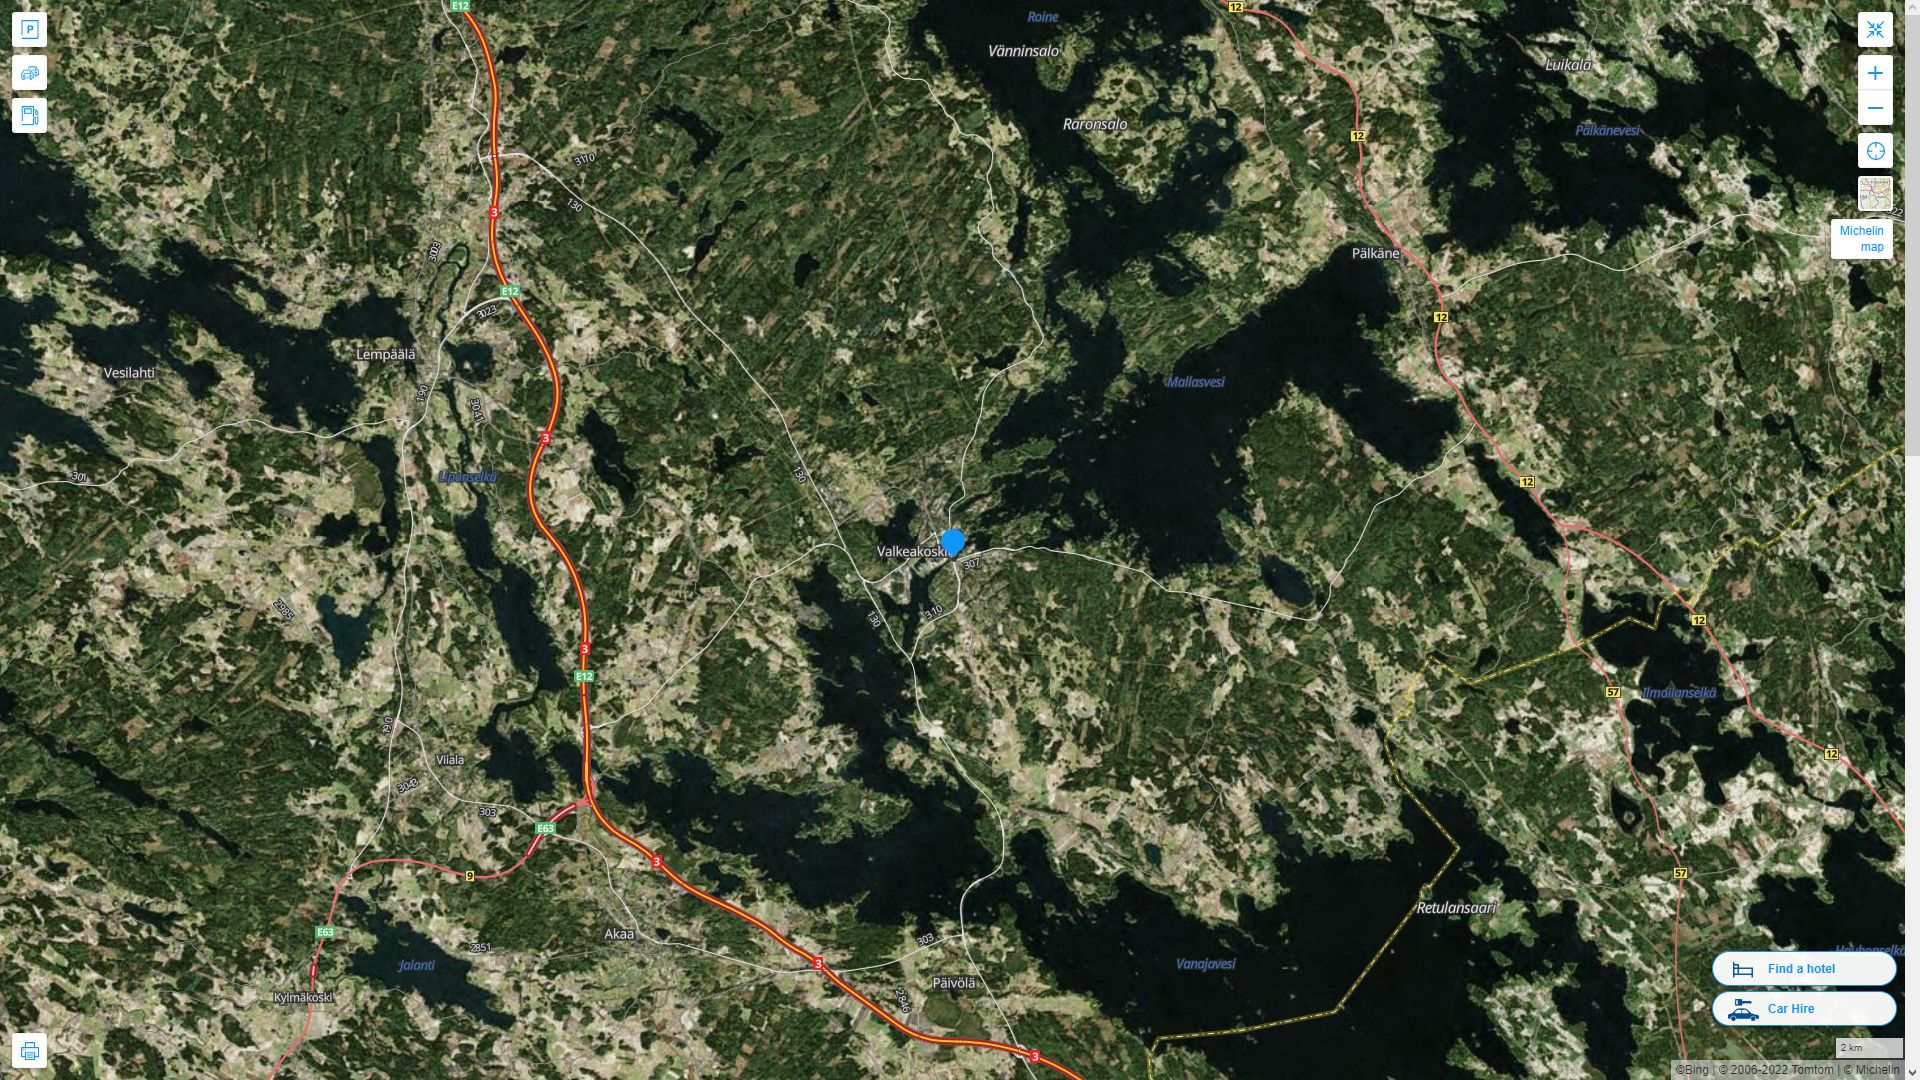 Valkeakoski Highway and Road Map with Satellite View